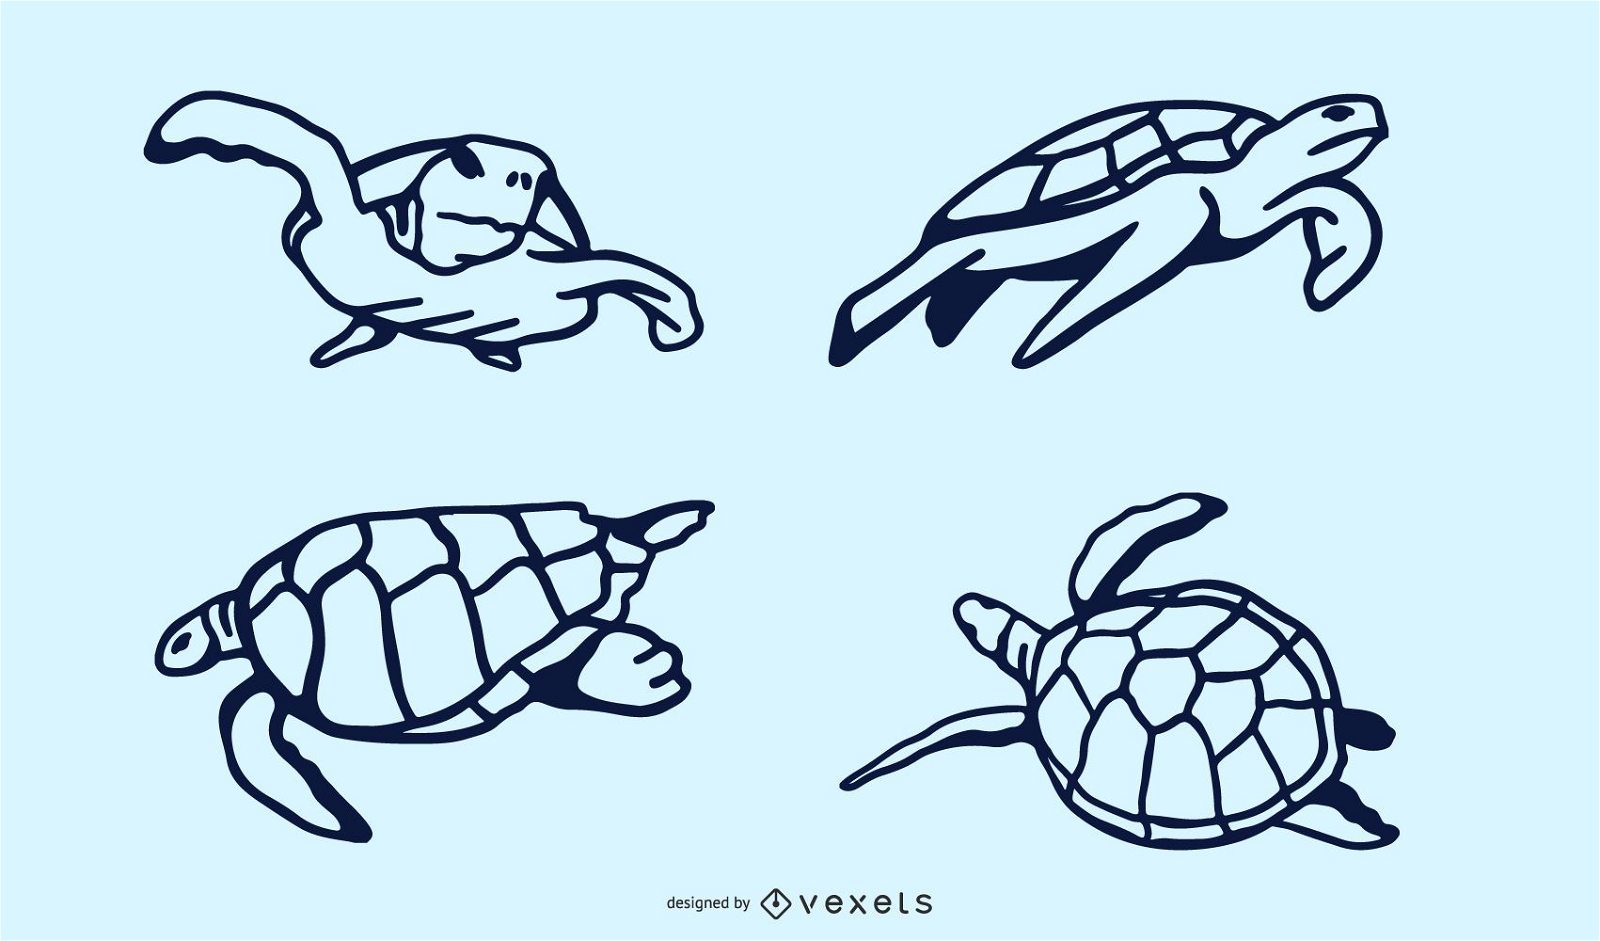 Projeto do Doodle da tartaruga marinha